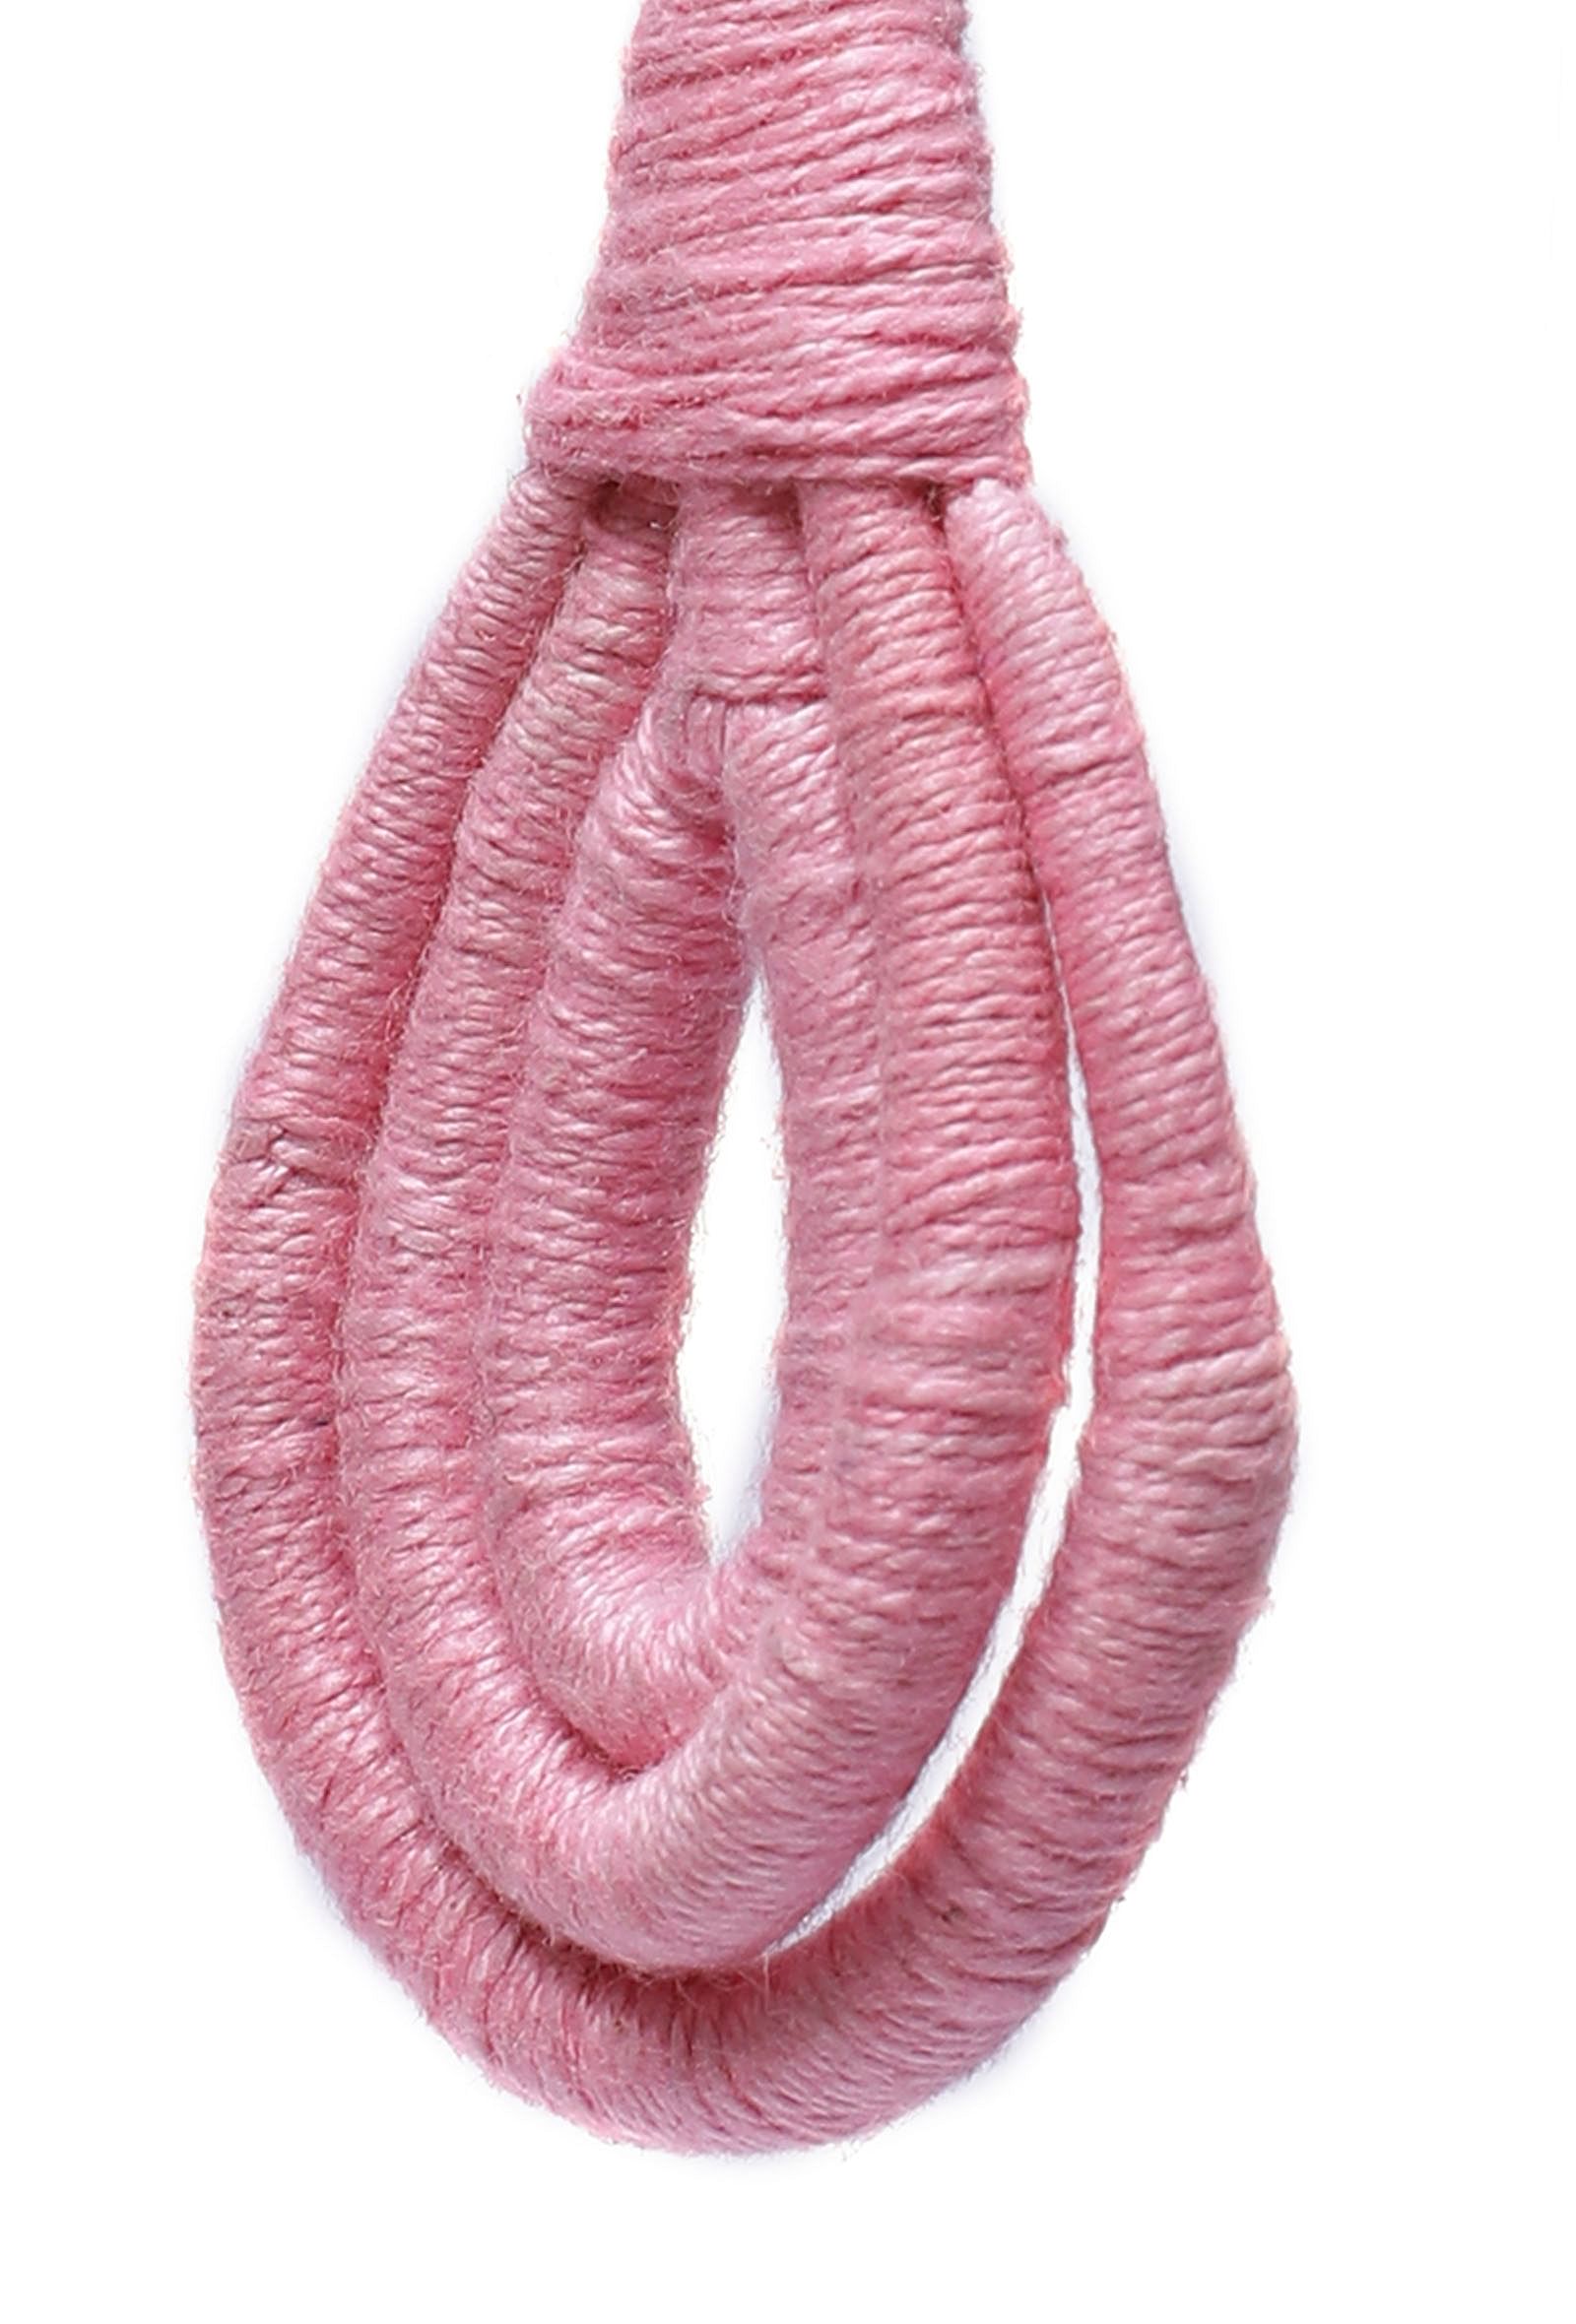 Rosy Pink Thread Tassels Thread Earrings